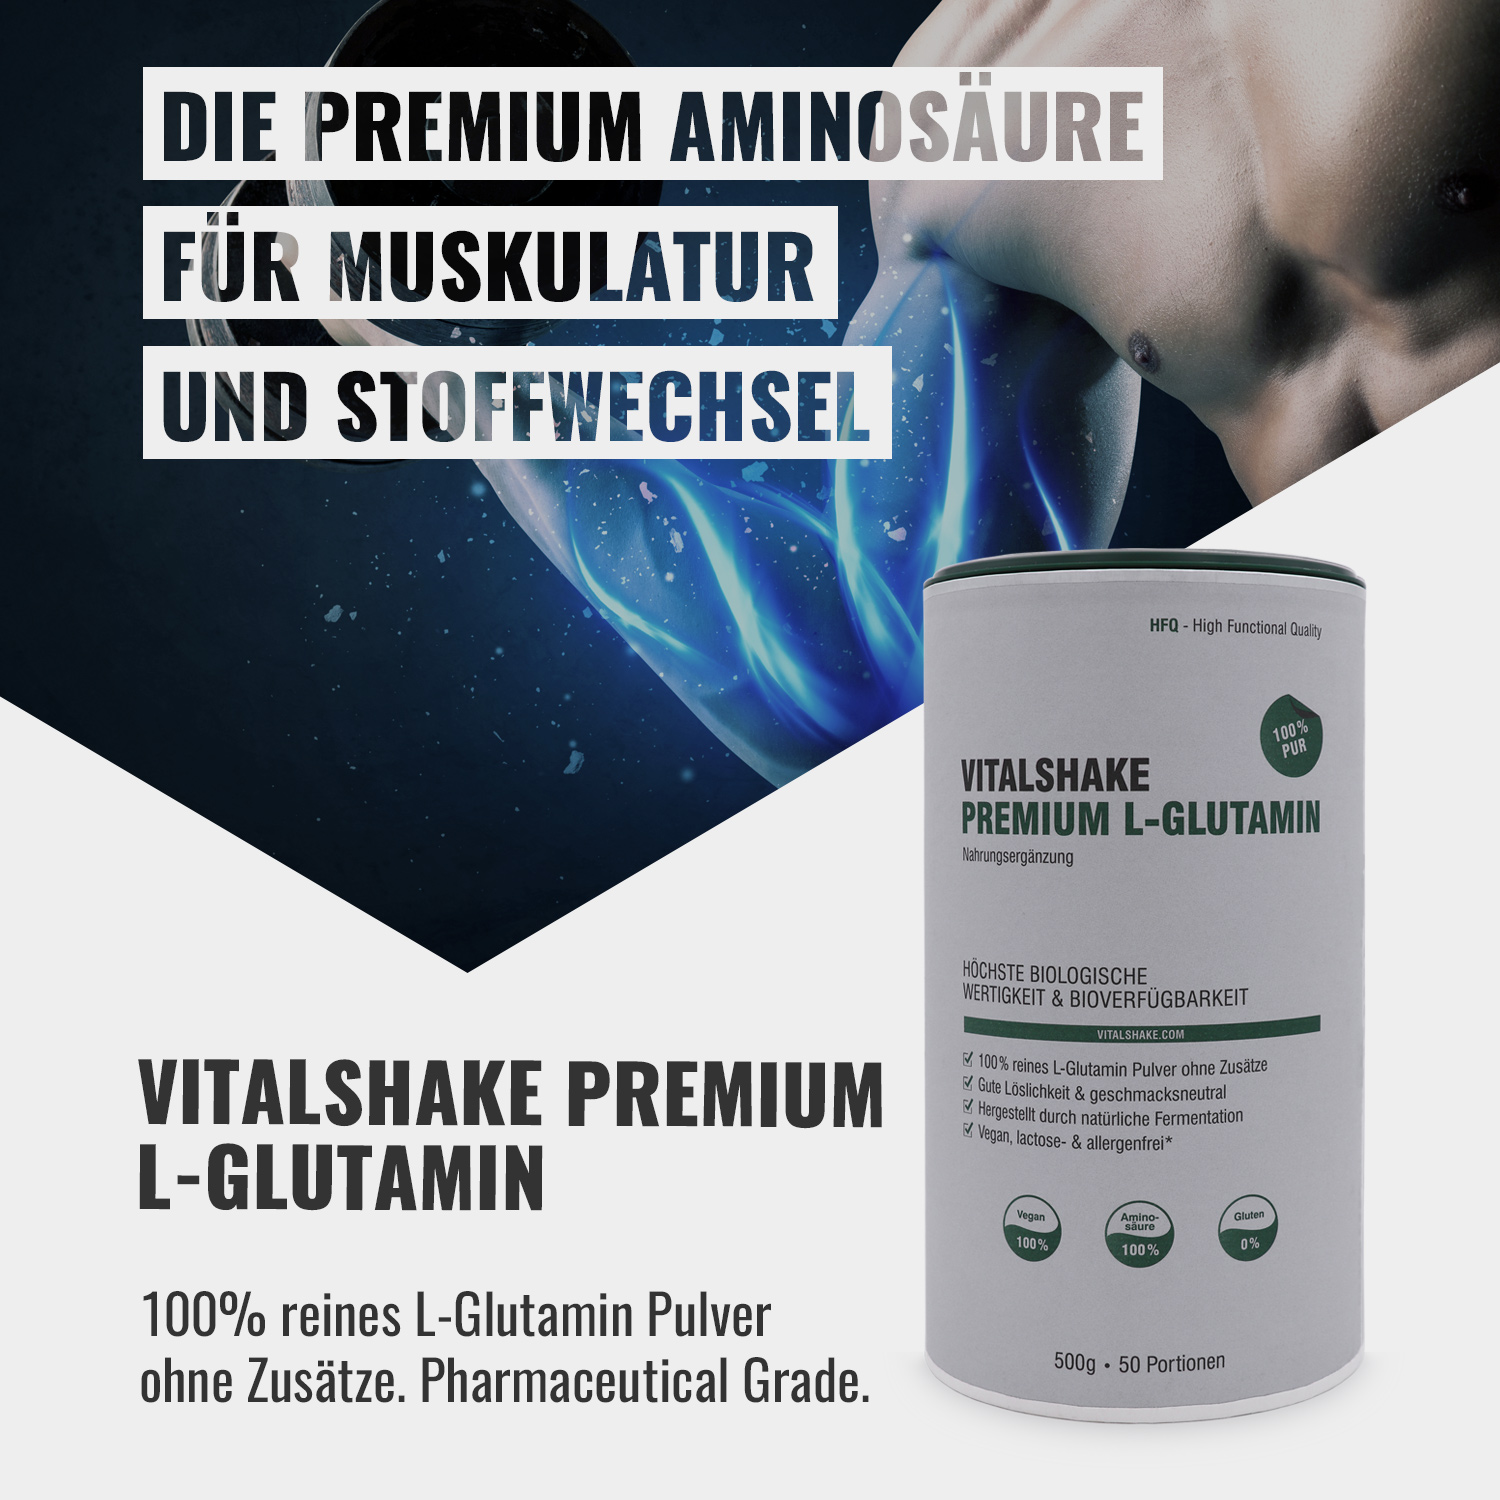 Vitalshake Premium L-Glutamin Pulver HFQ